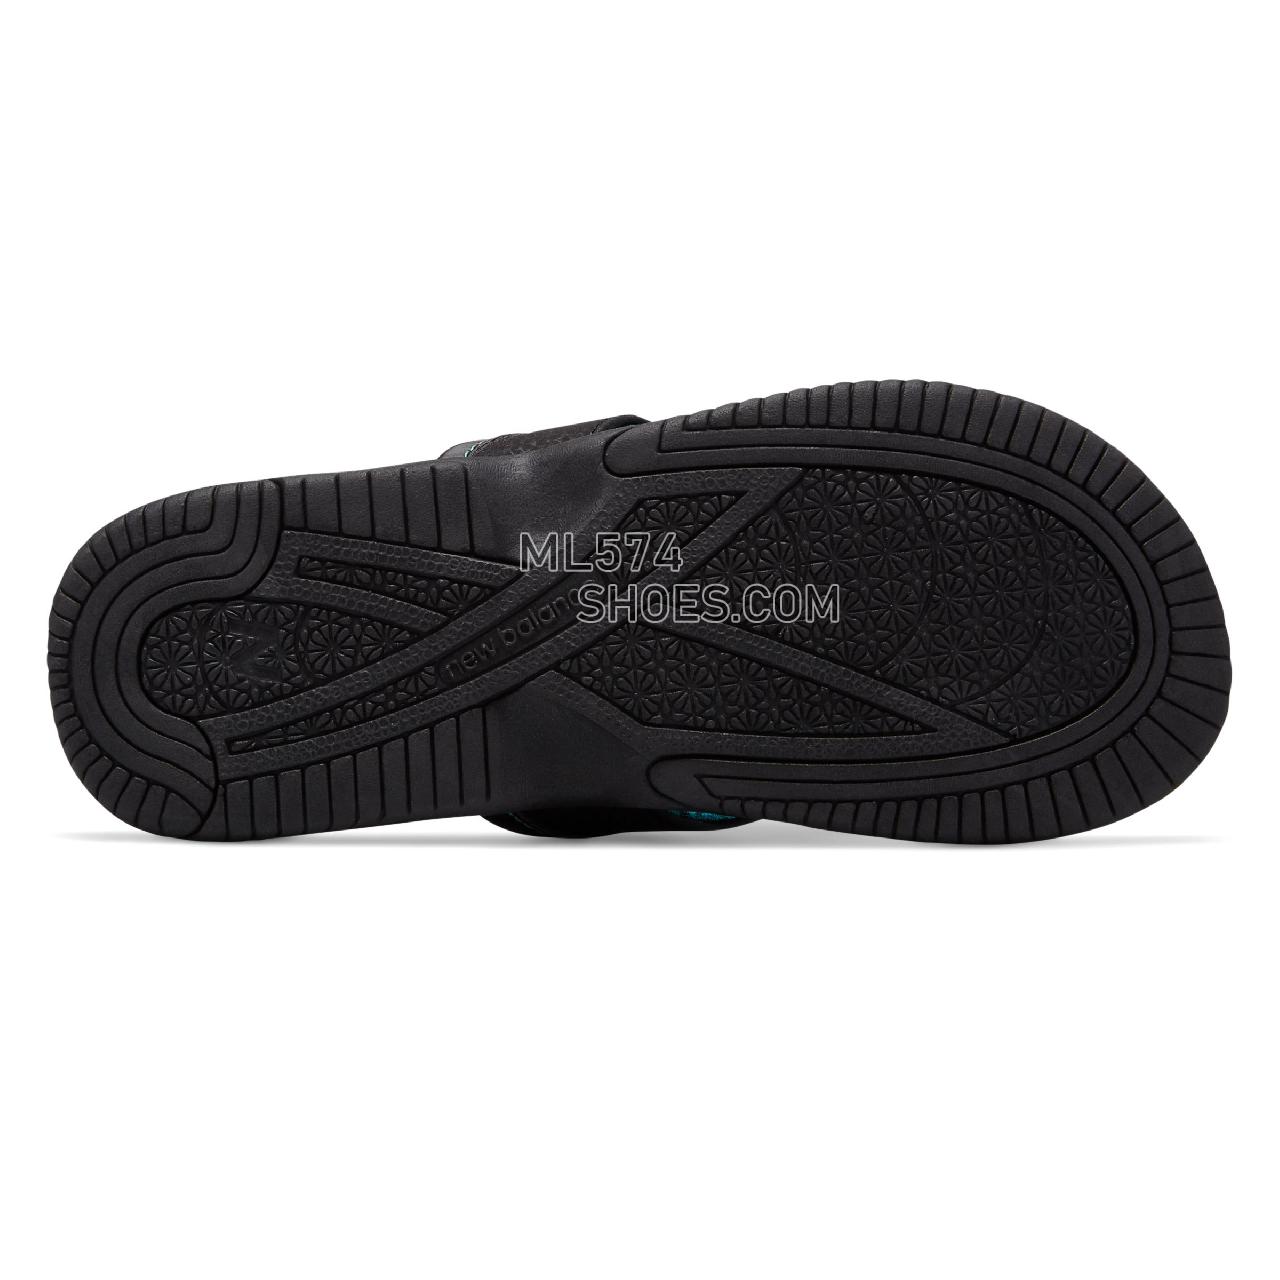 New Balance Jojo Thong - Women's 6090 - Sandals Black with Teal - W6090BTL